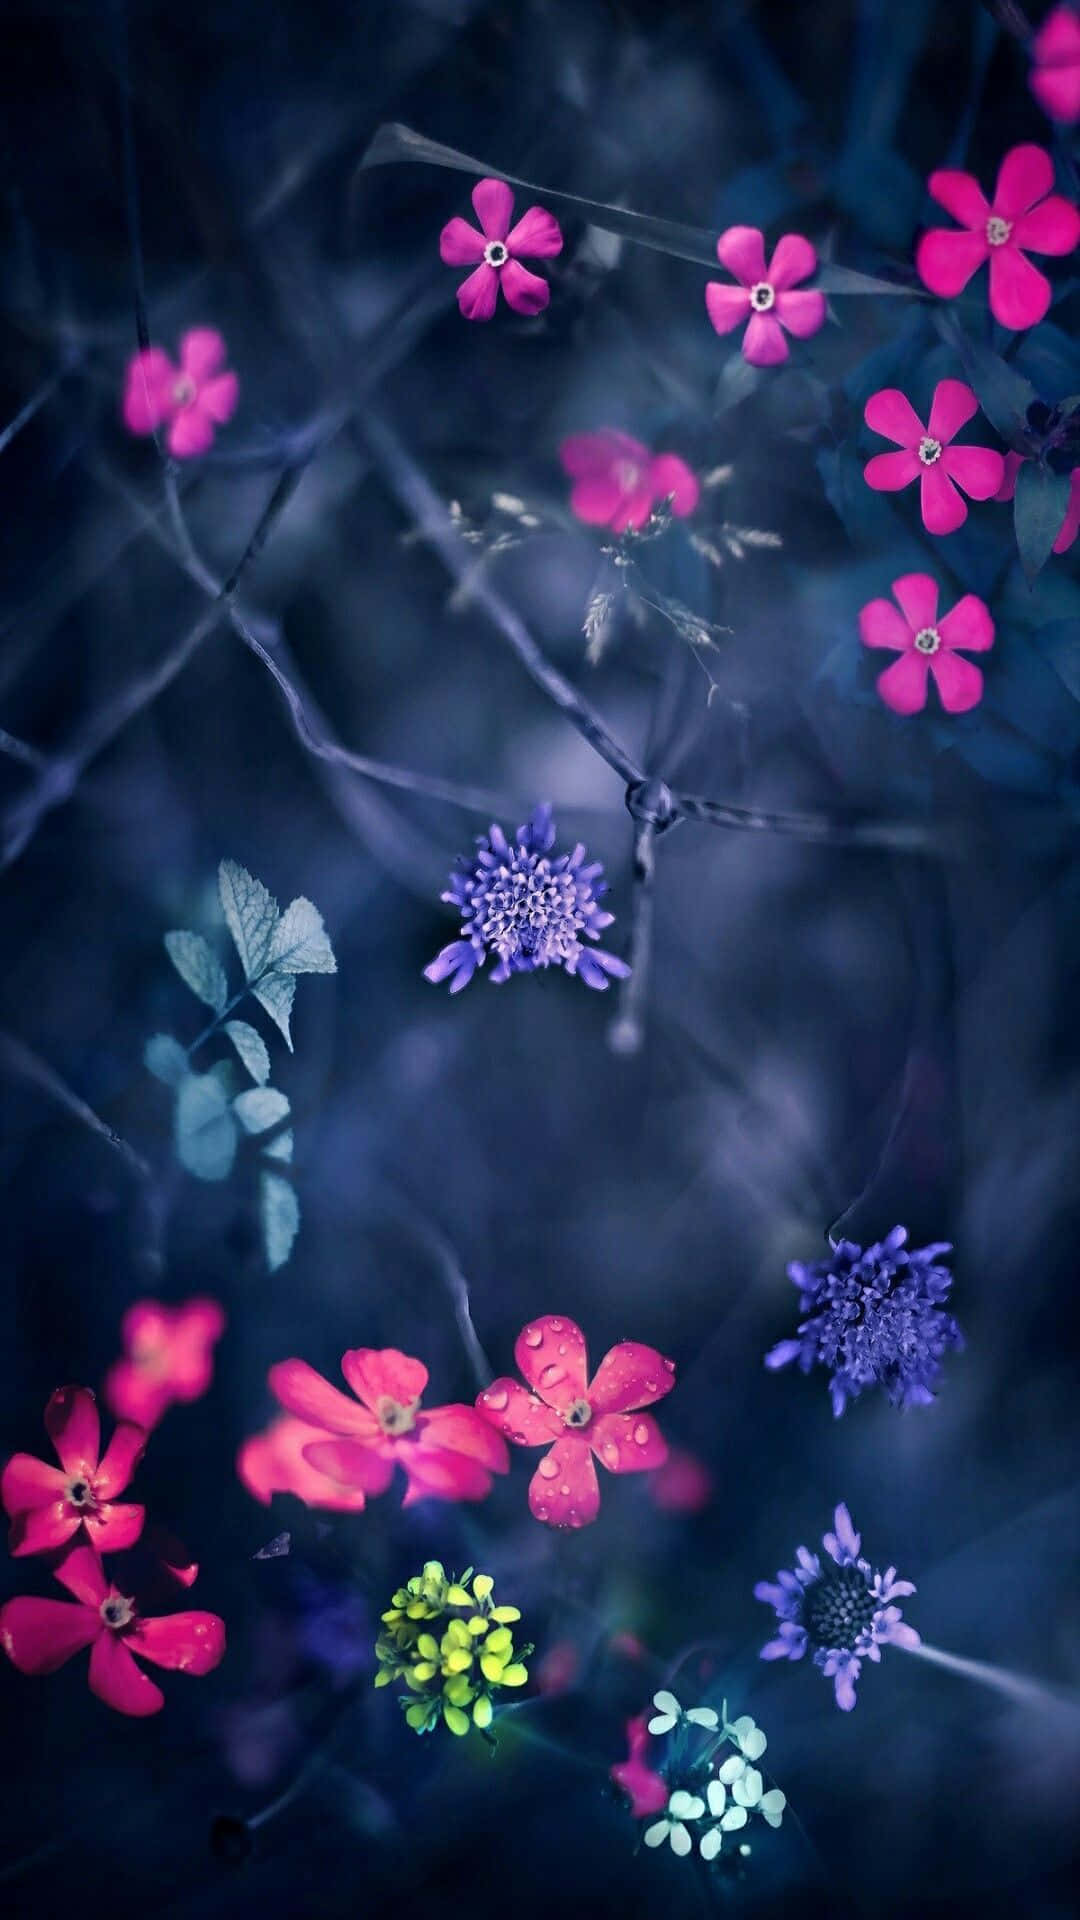 Vibrant Bunga Flowers in Bloom